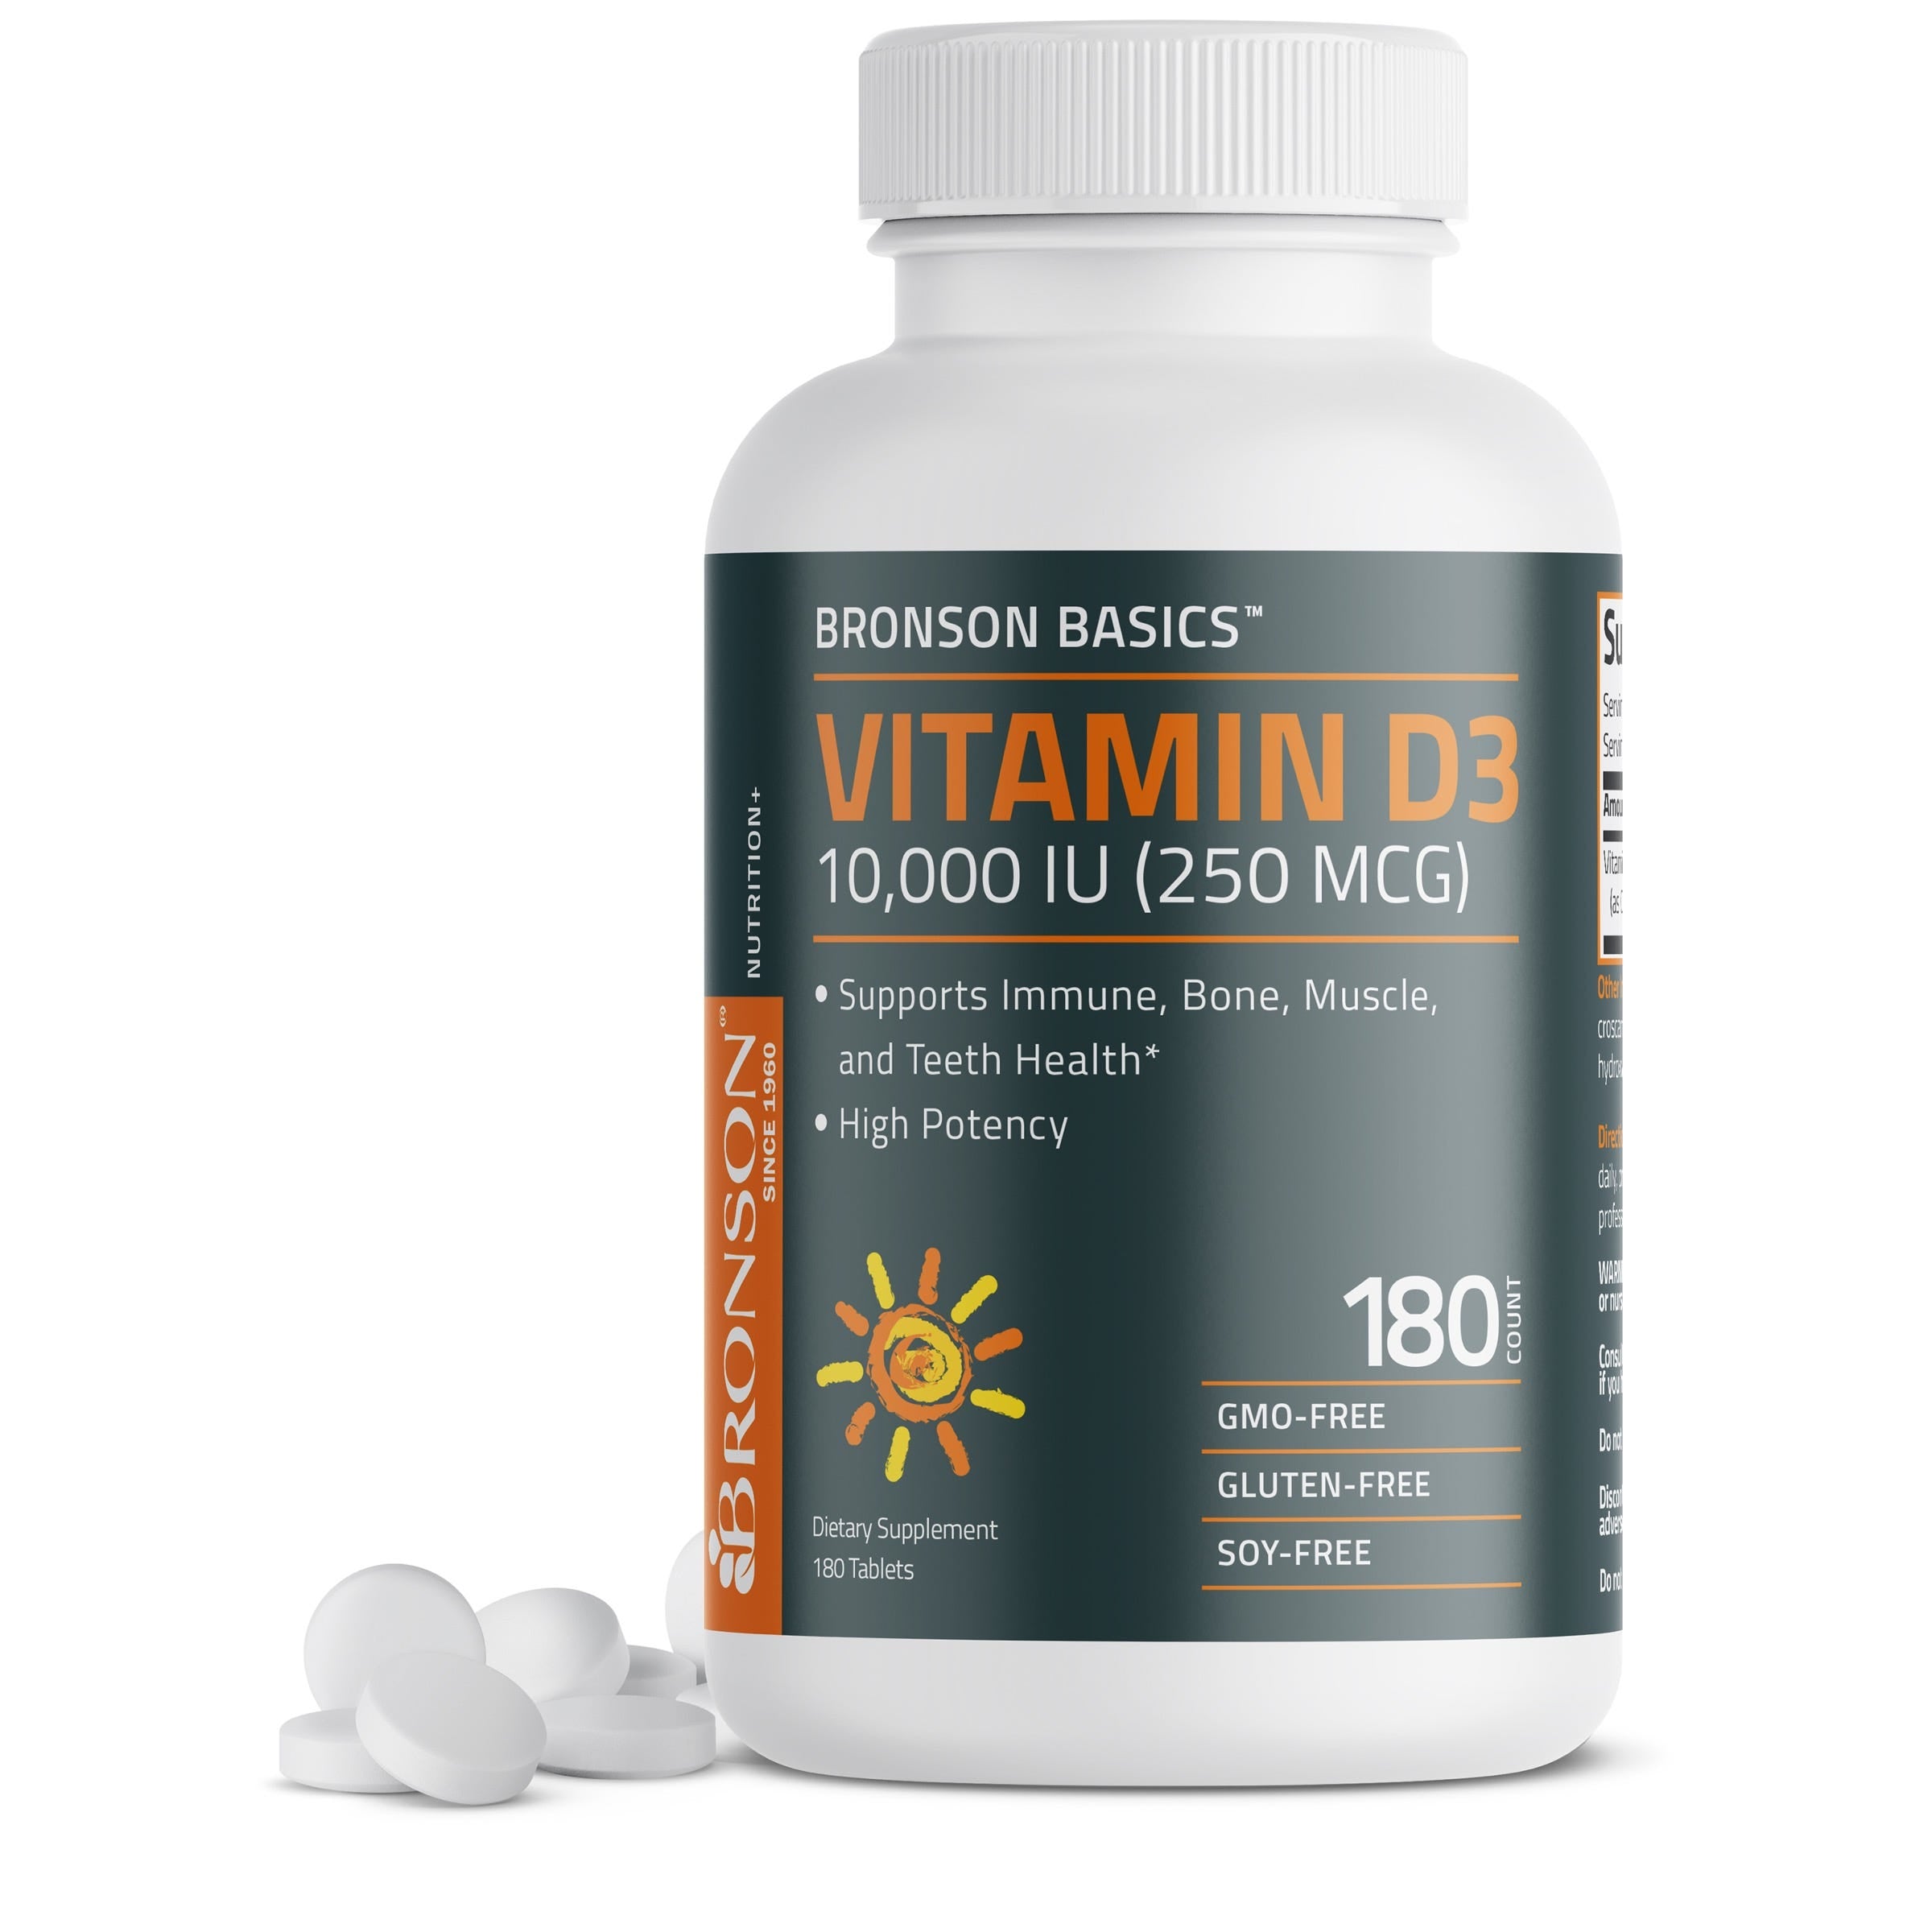 Vitamin D3 10,000 IU (250 MCG)